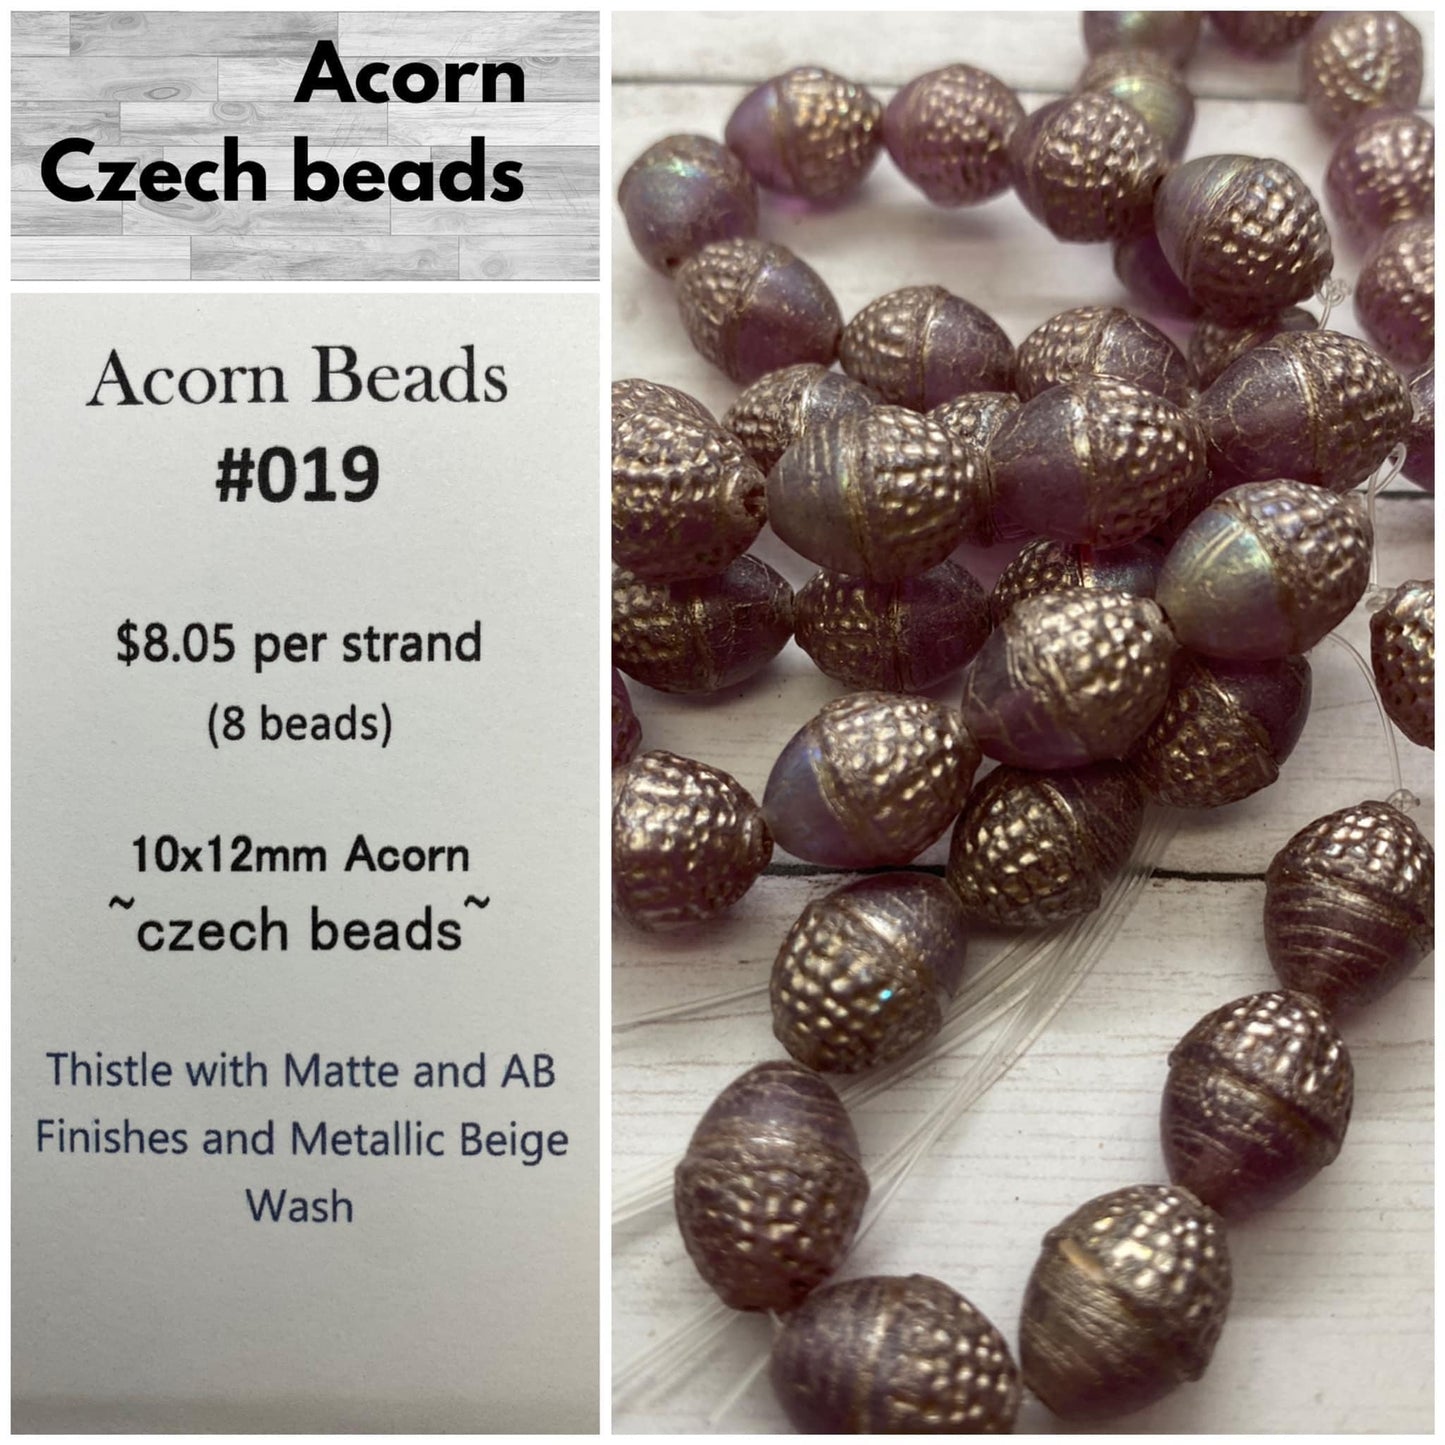 Acorn Beads 10x12mm #019